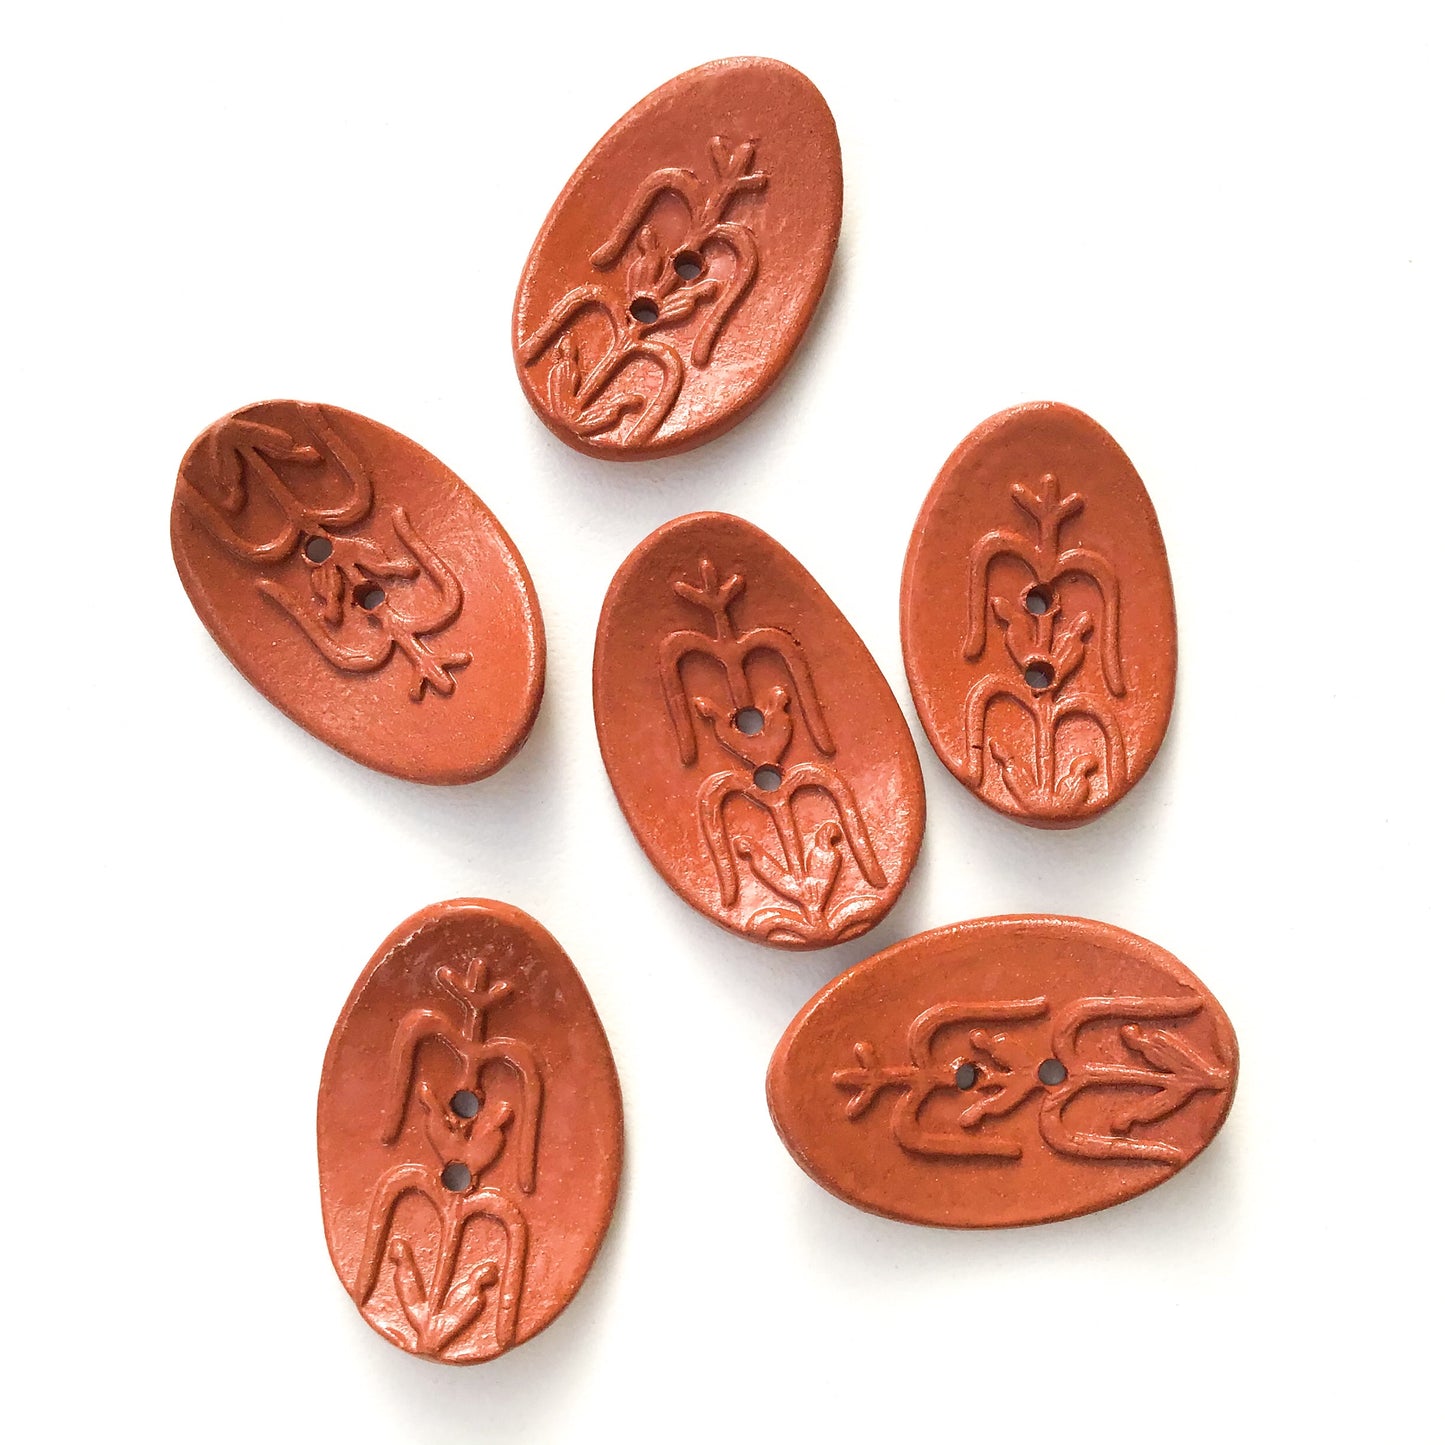 Southwestern Corn Buttons - Reddusg-Brown Ceramic Buttons - 5/8" x 1" - 5 Pack